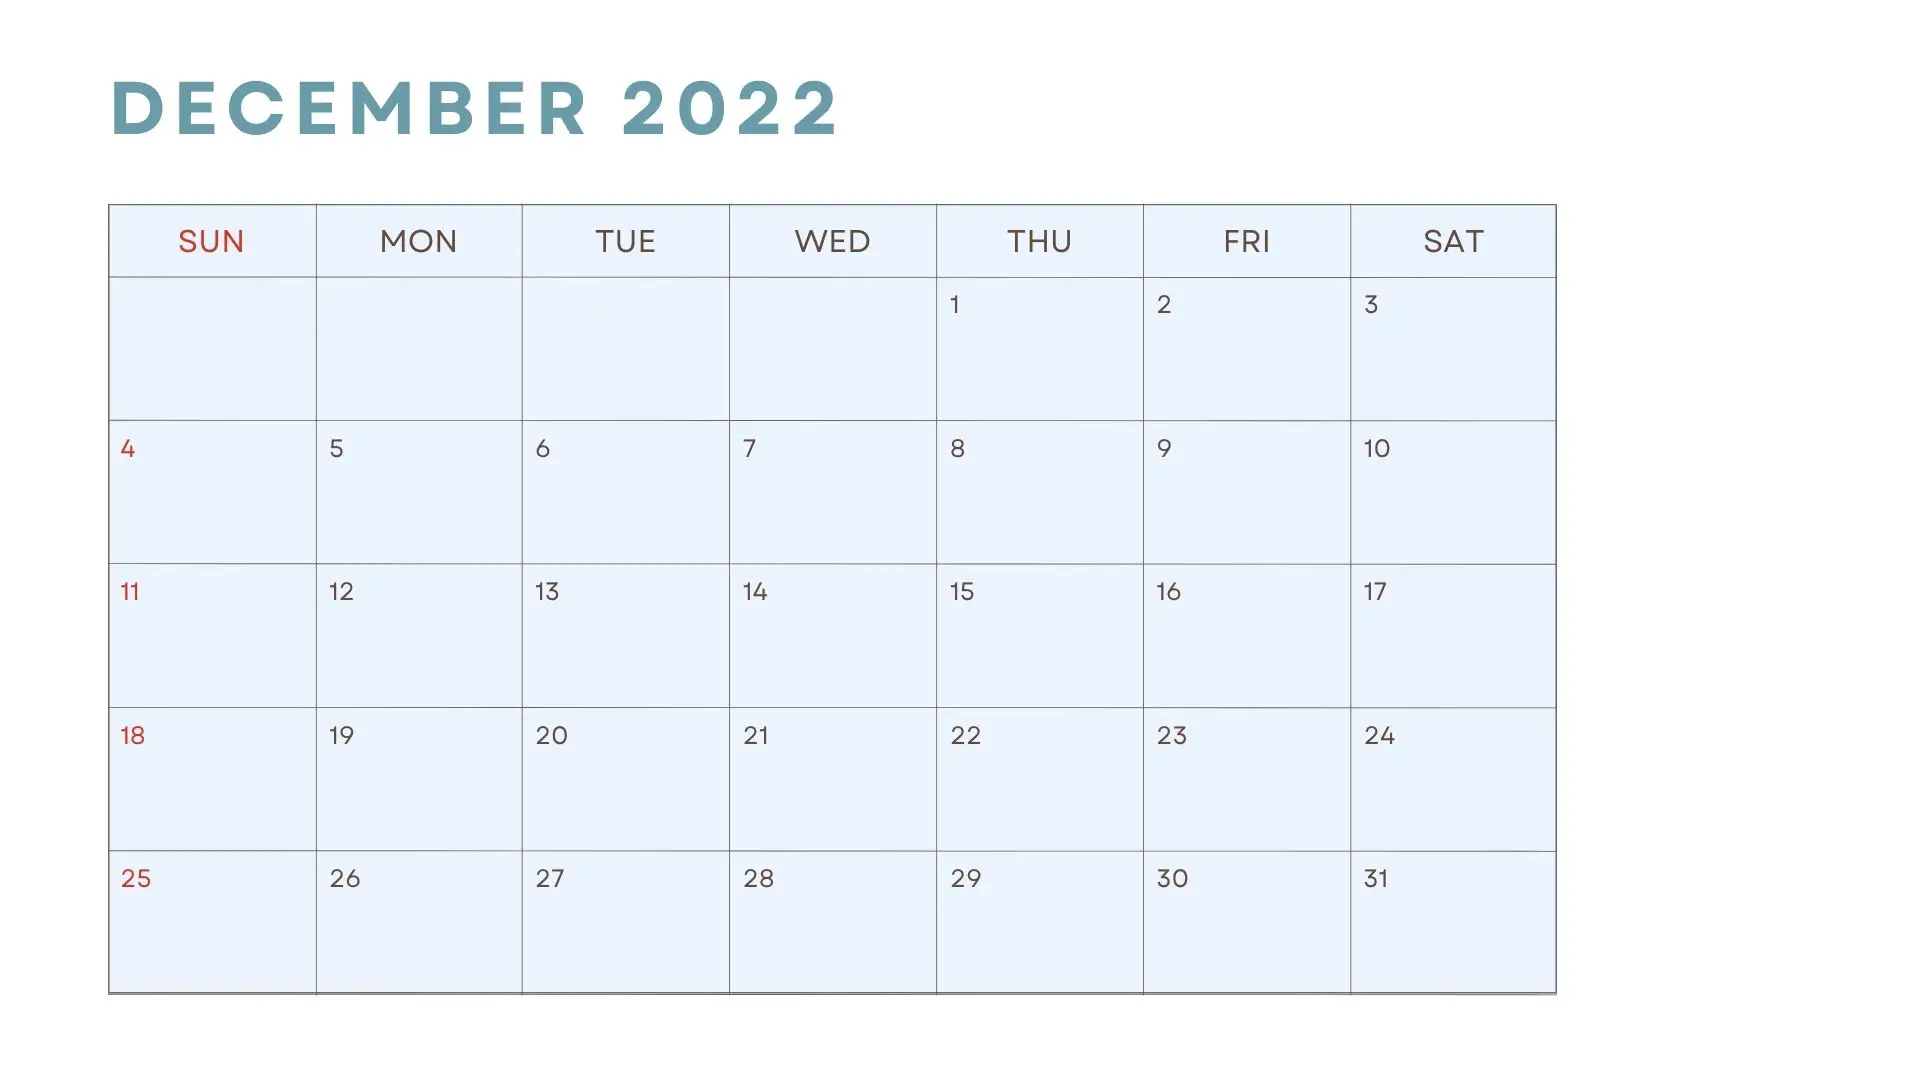 24 Cute Aesthetic December Calendars & Wallpapers 2022 (Free) - Onedesblog